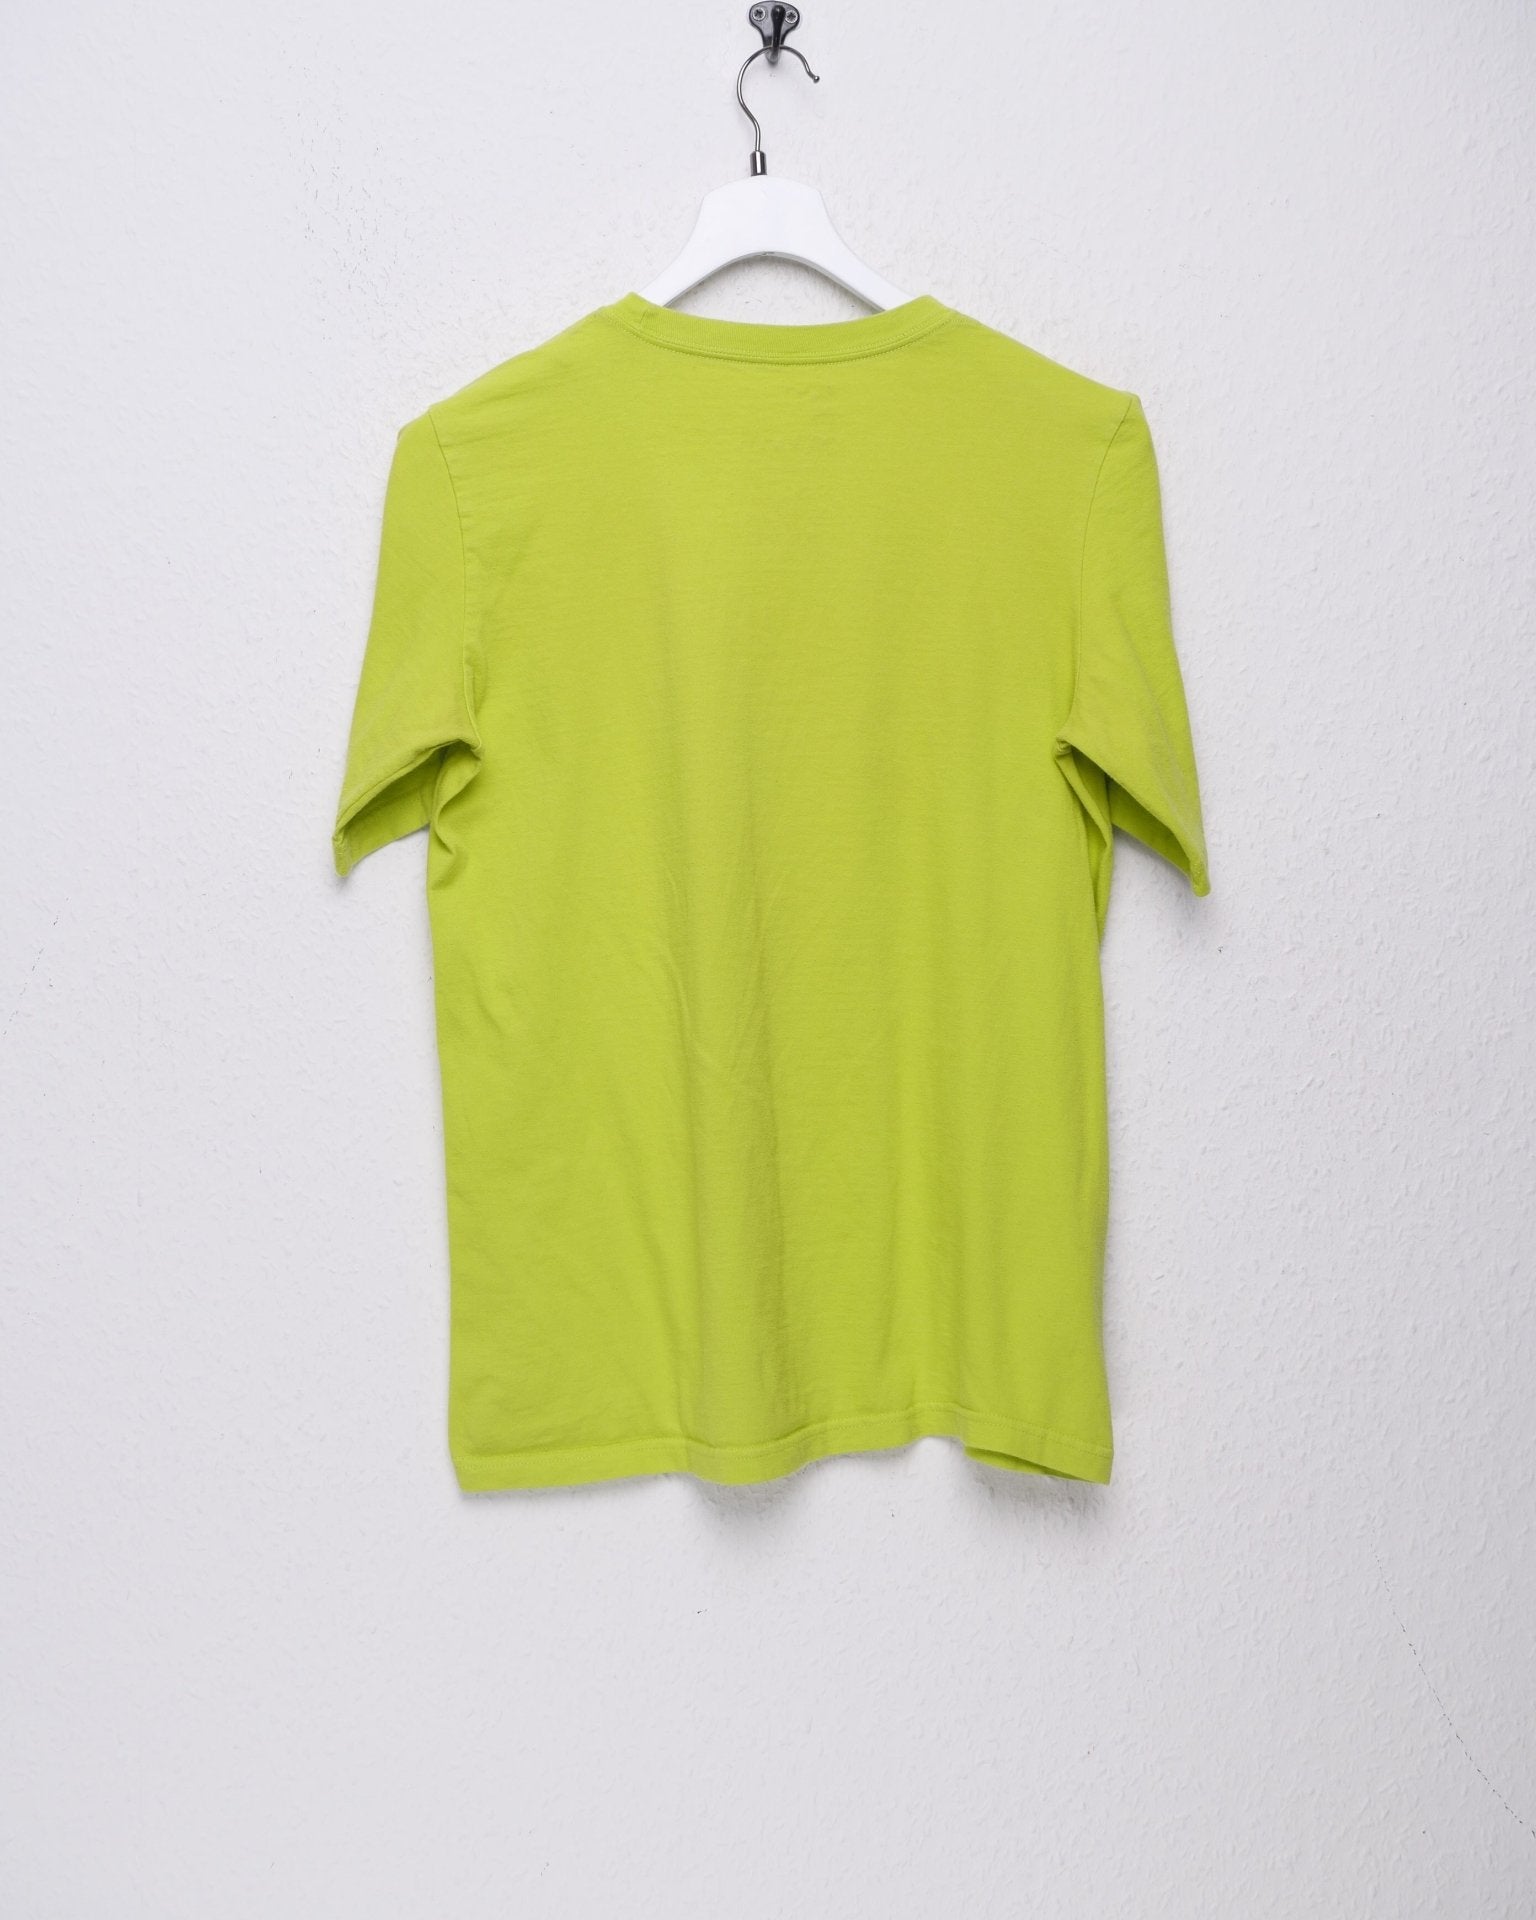 Nike 'no limits' Middle Swoosh lemon Shirt - Peeces